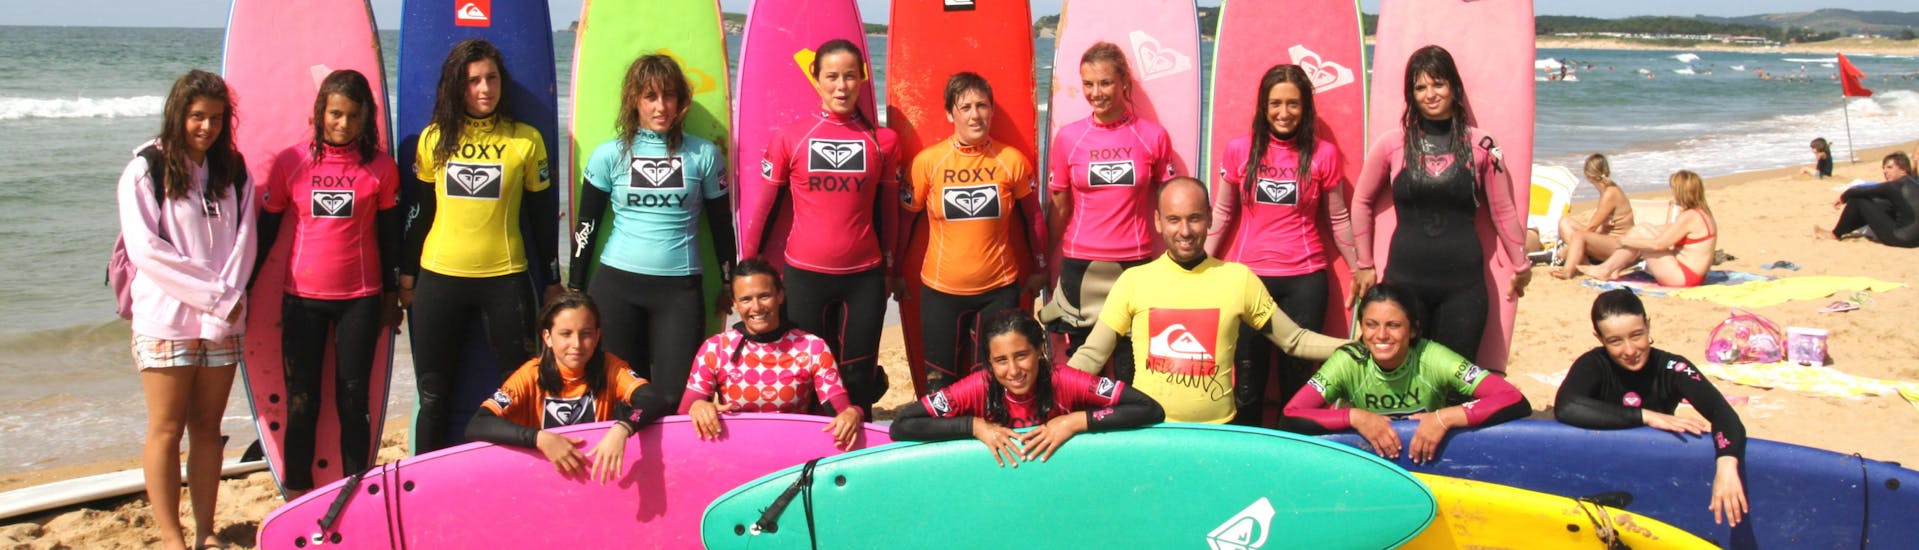 Lezioni di surf a Somo da 6 anni per tutti i livelli.